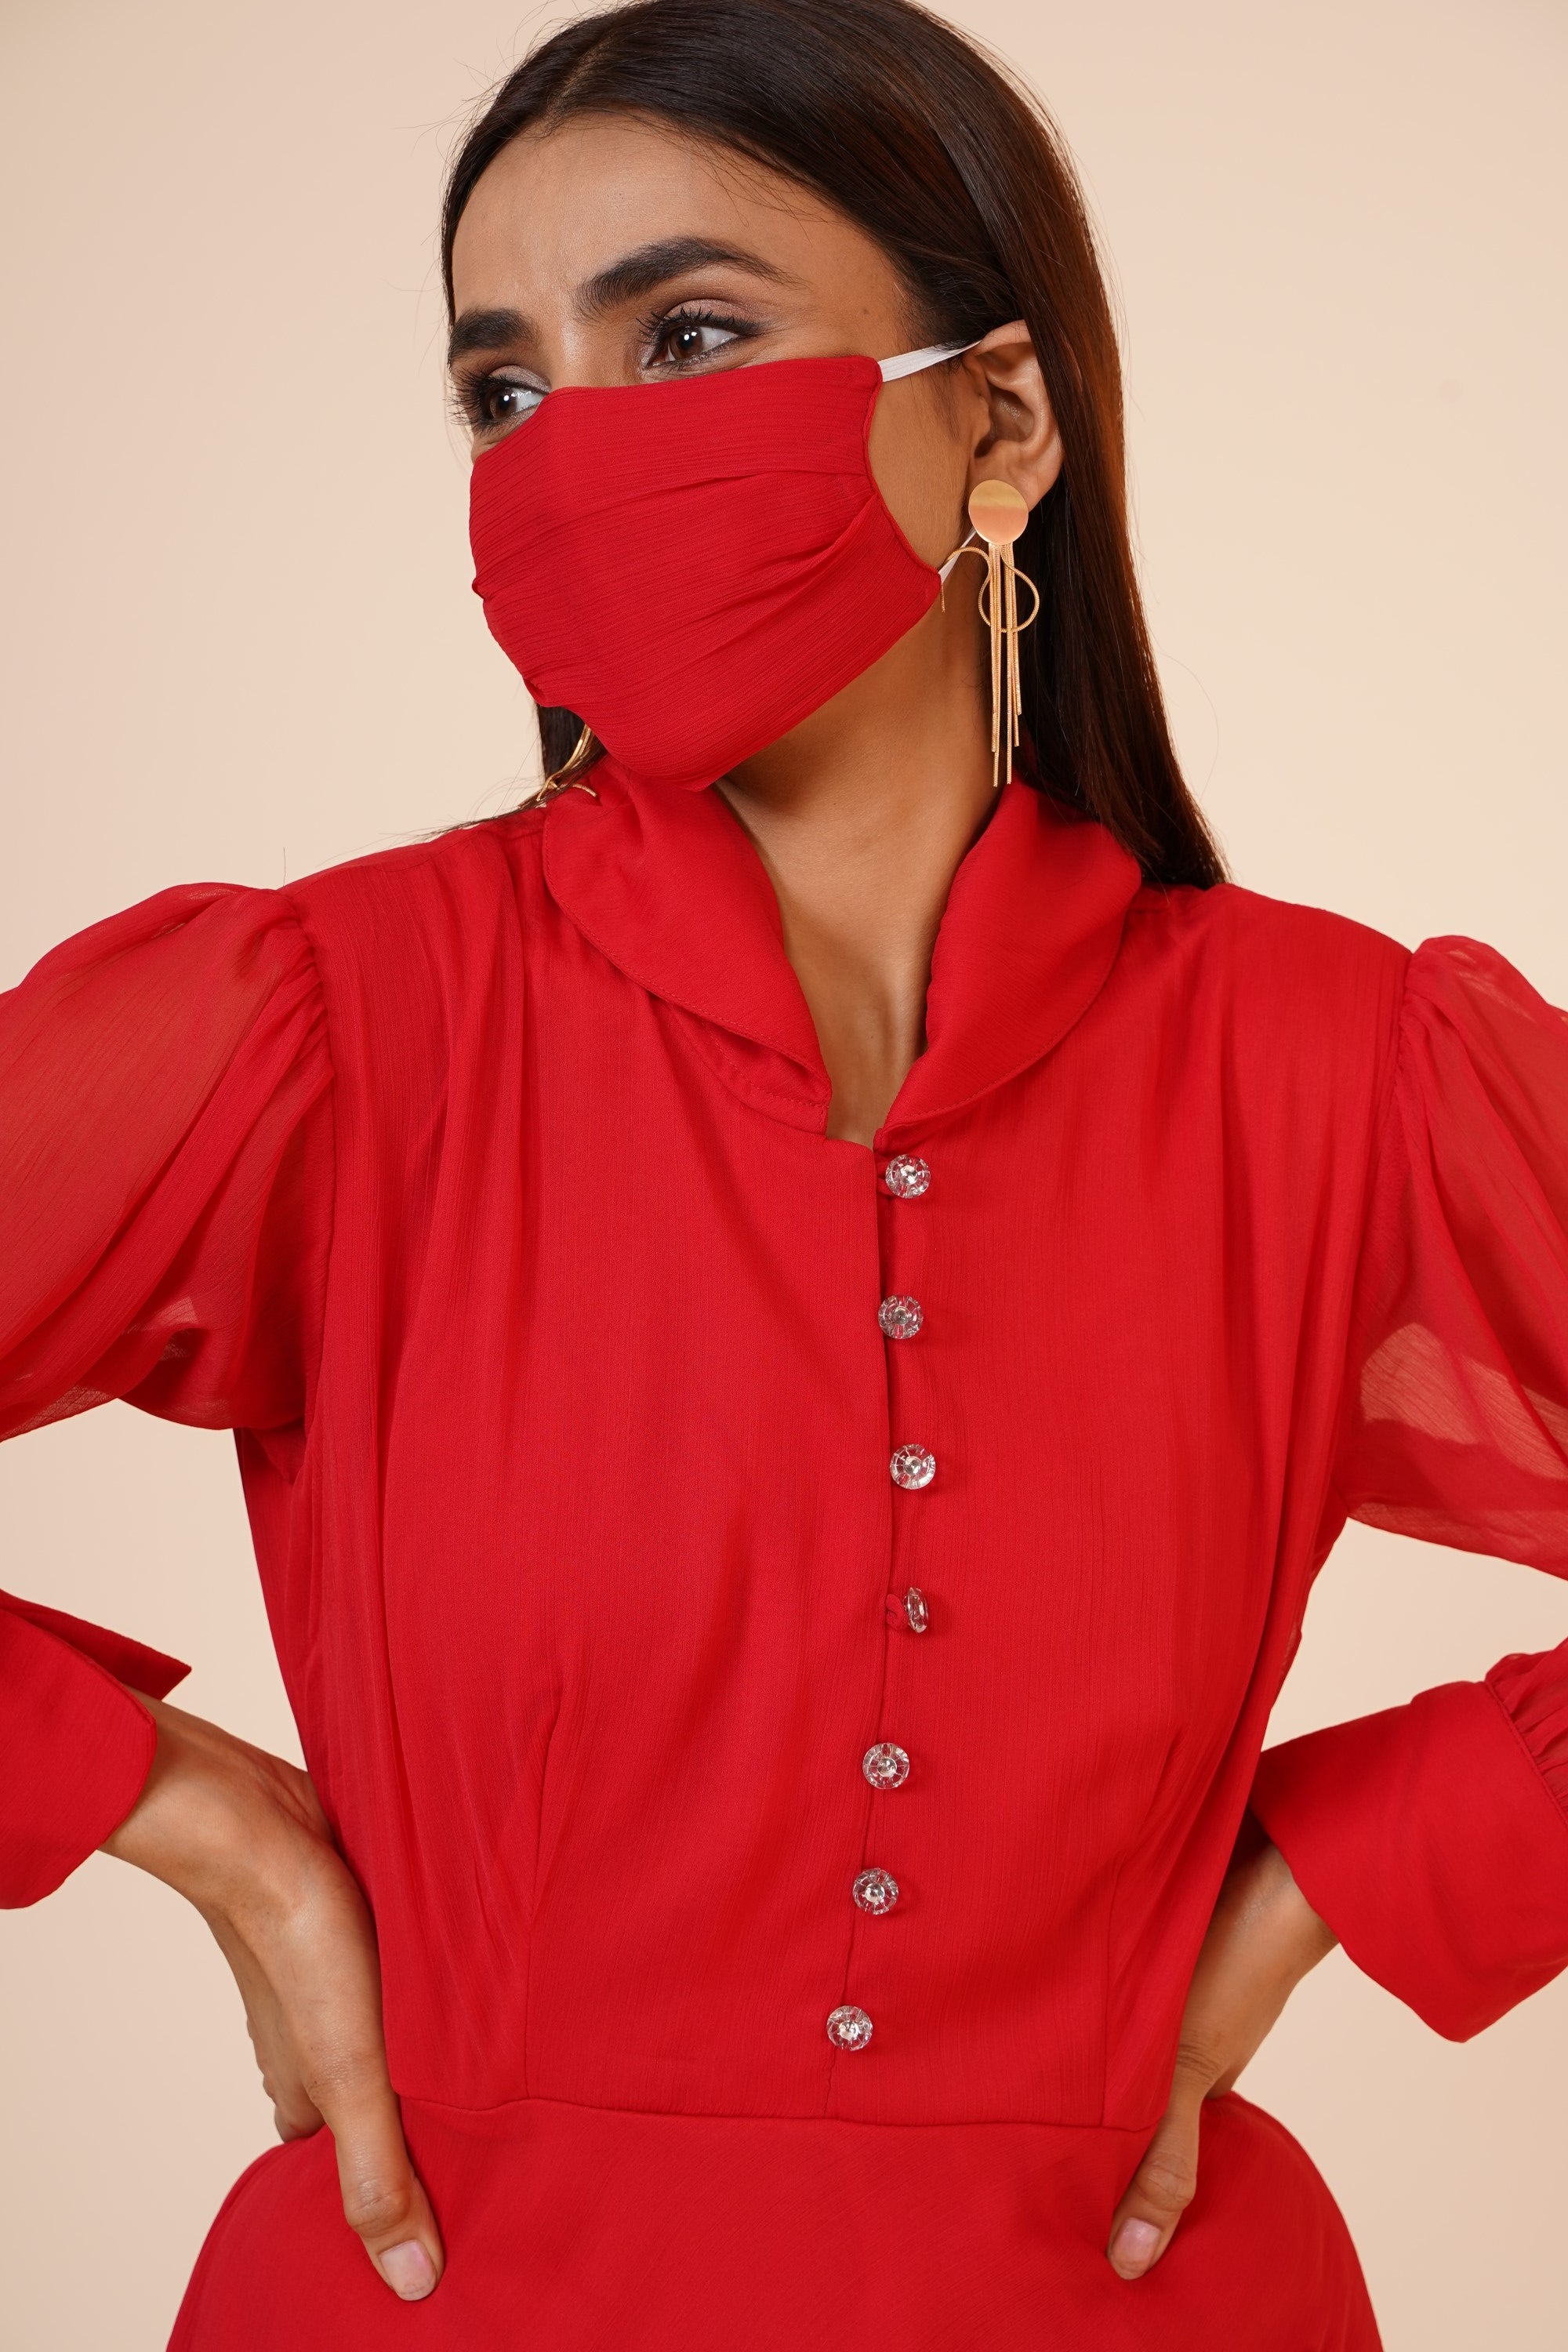 Women's Red Chiiffon Casual Midi Dress - MIRACOLOS by Ruchi